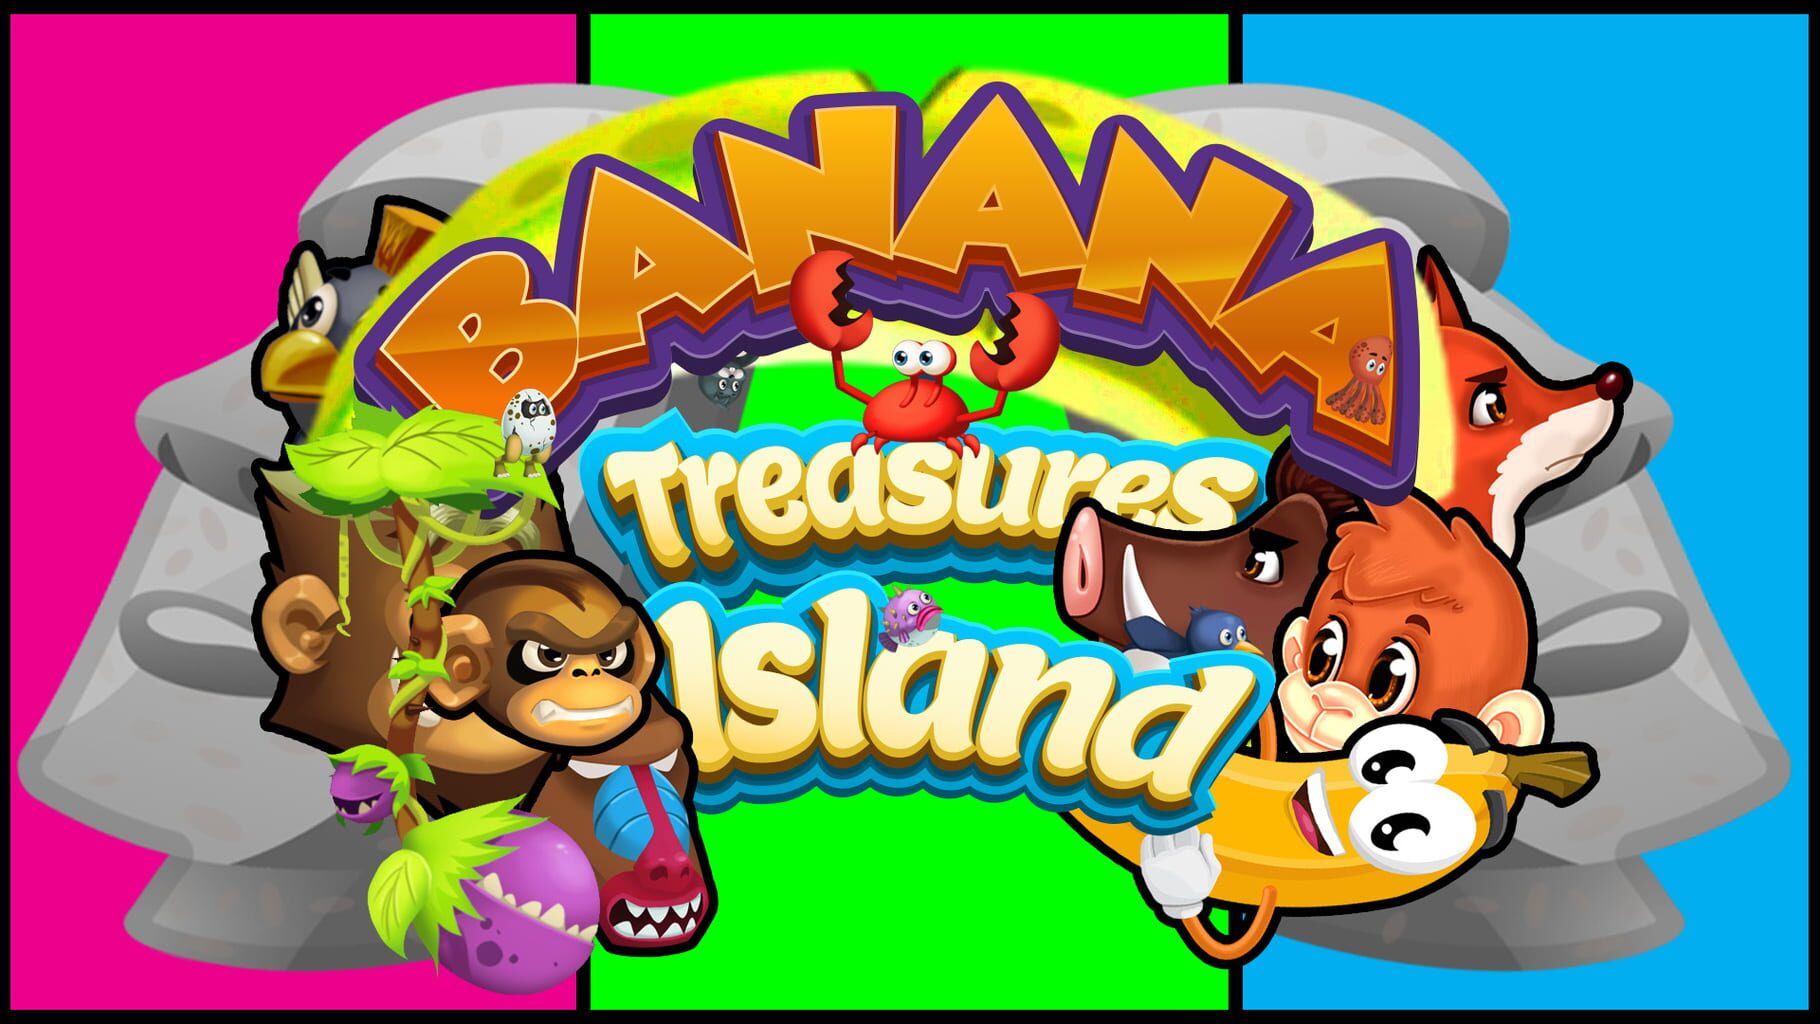 Banana Treasures Island artwork